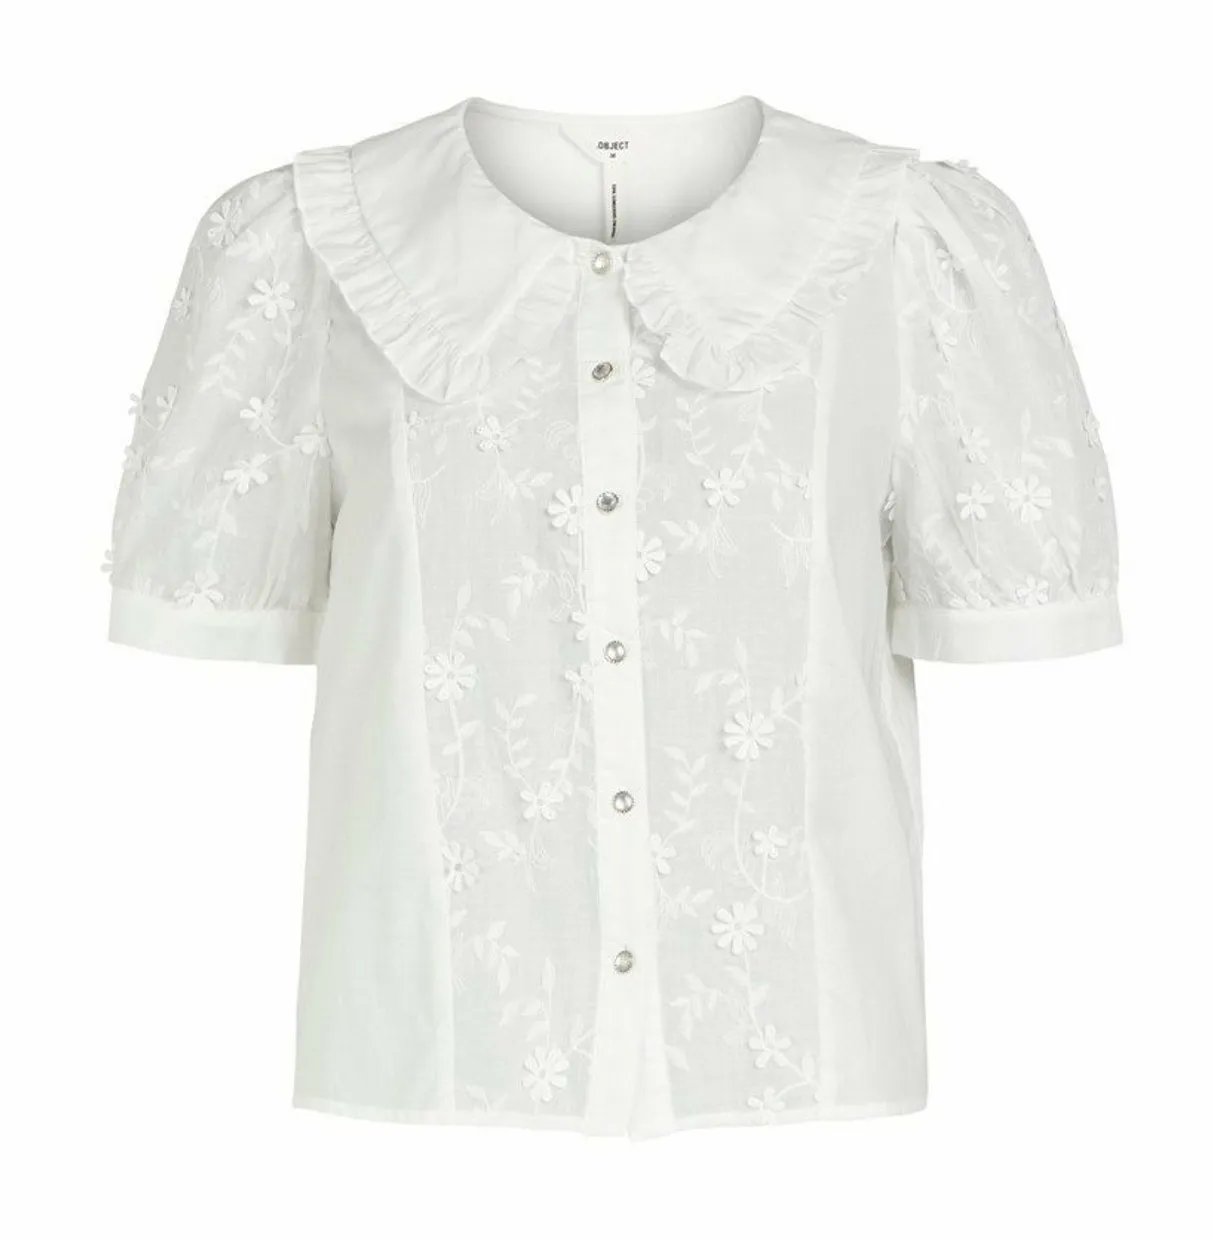 Ida embroidery blouse white